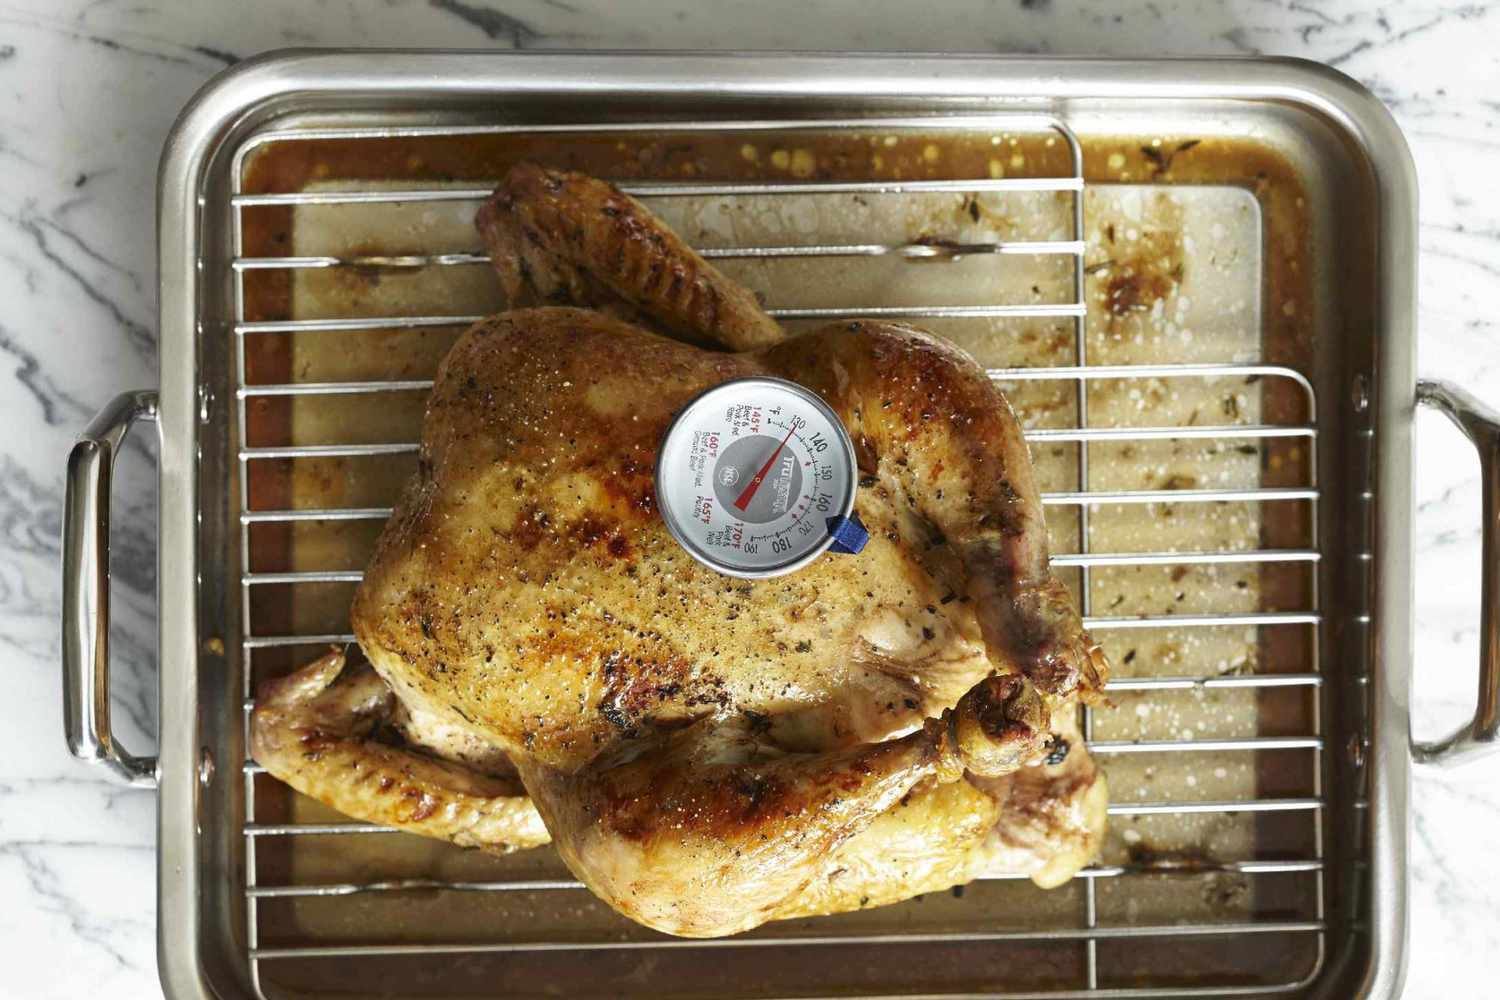 Roast turkey on roasting rack with thermometer inside